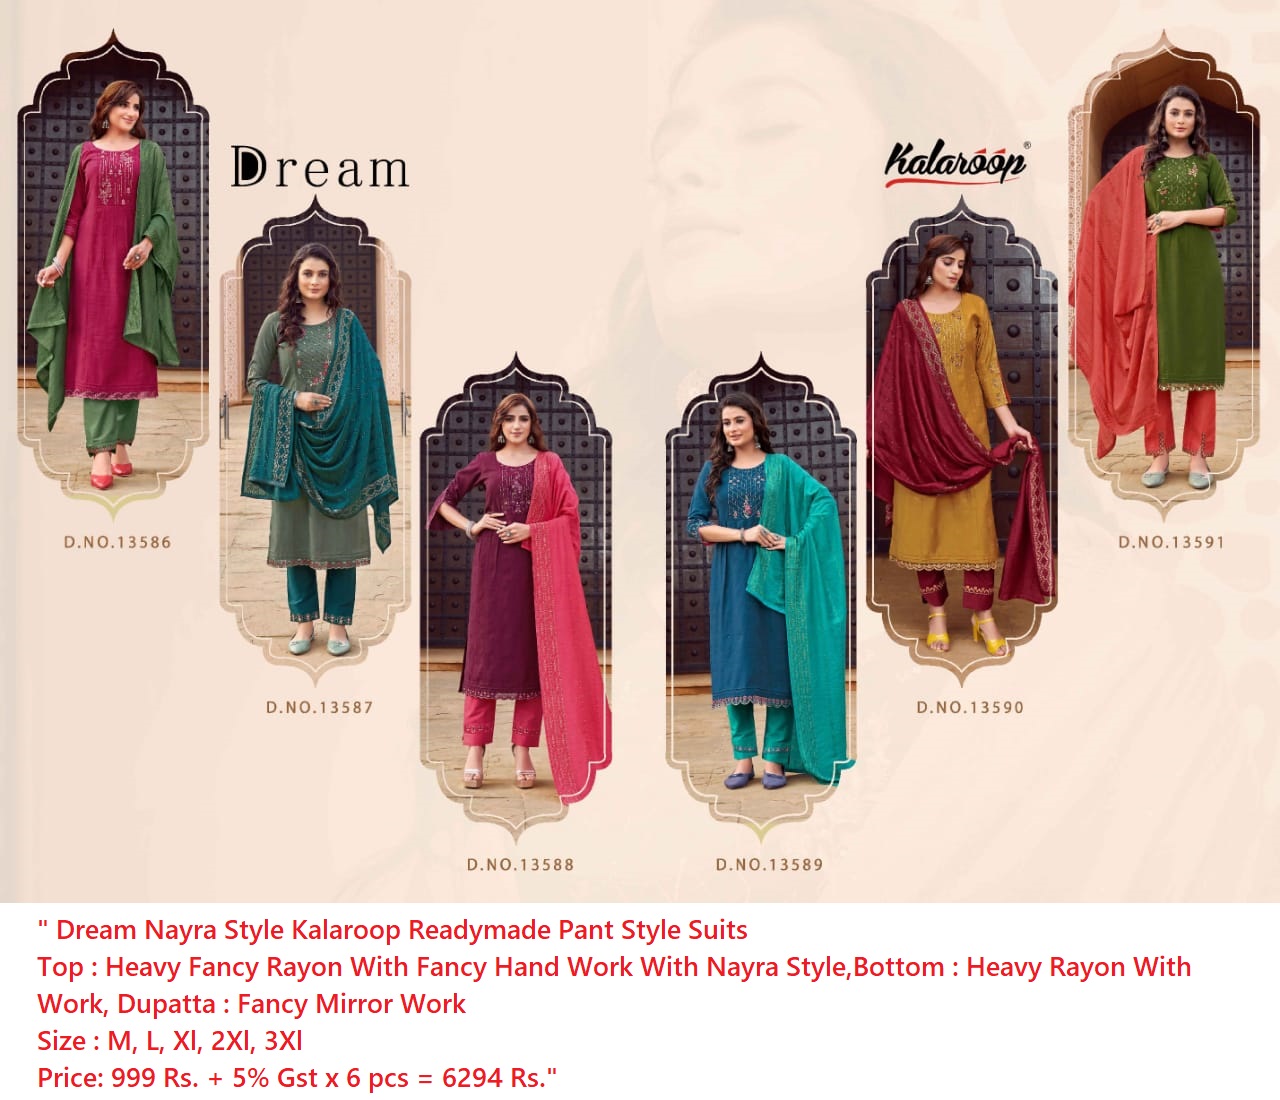 Buy Rayon Handwork Dream Nayra Style Kalaroop Readymade Pant